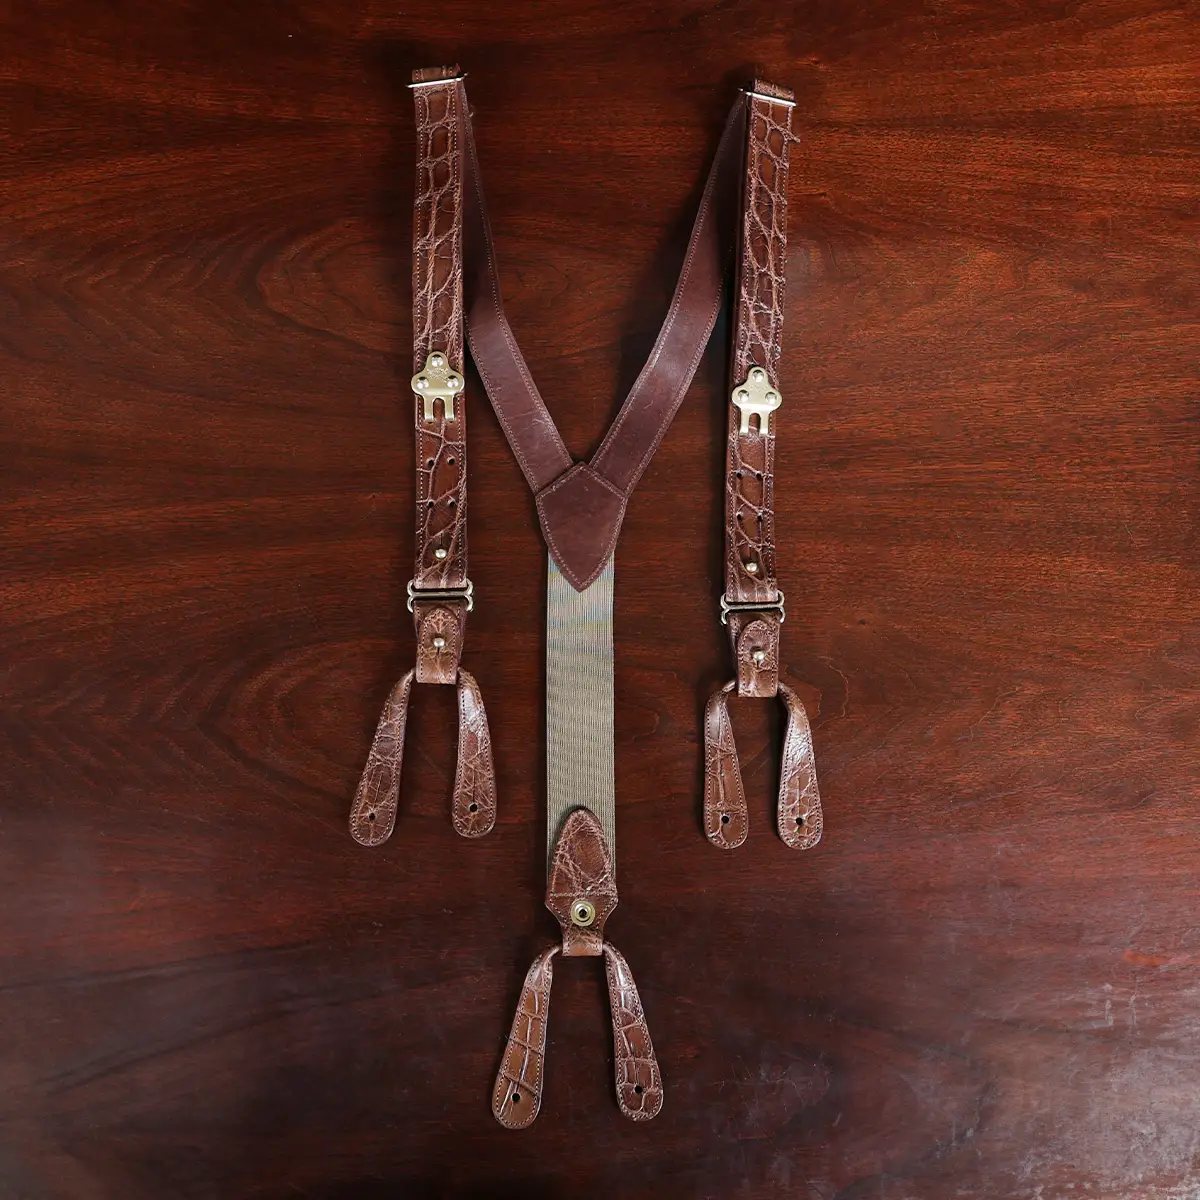 Leather Bison Suspenders Adjustable No. 1, USA Made